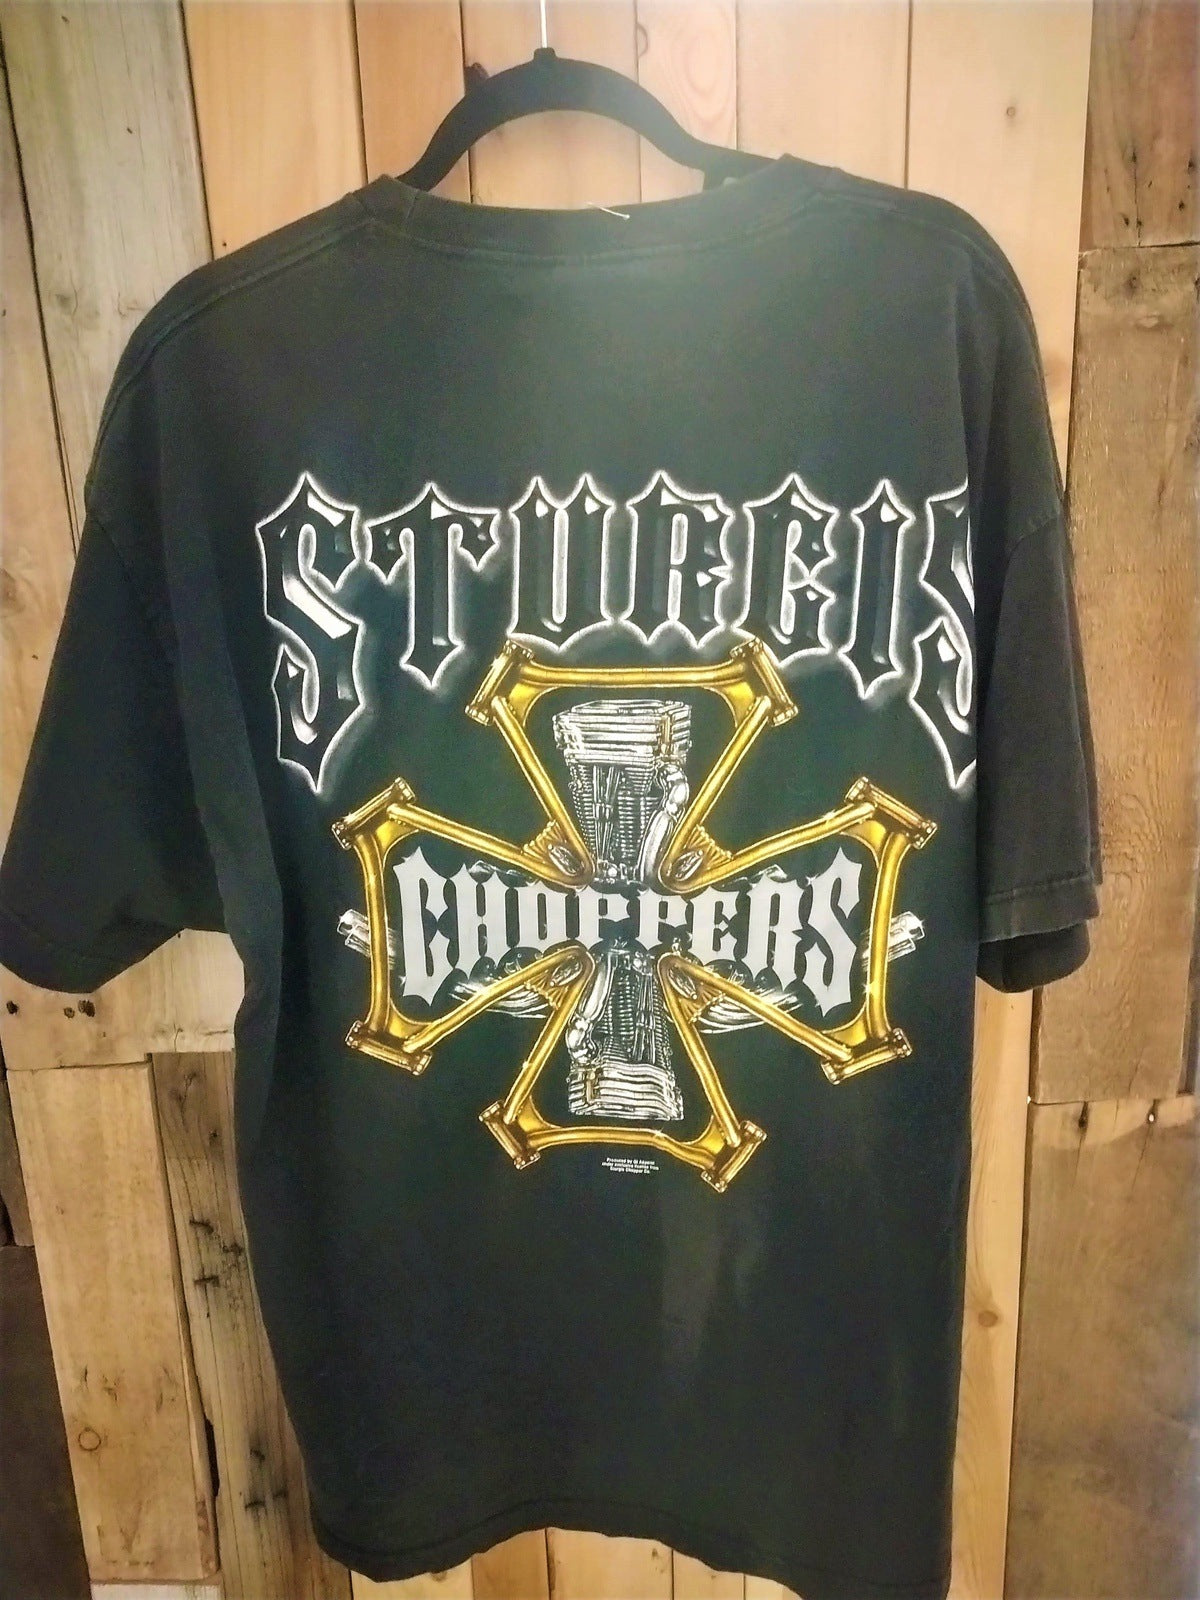 Sturgis Choppers T Shirt Size 2XL